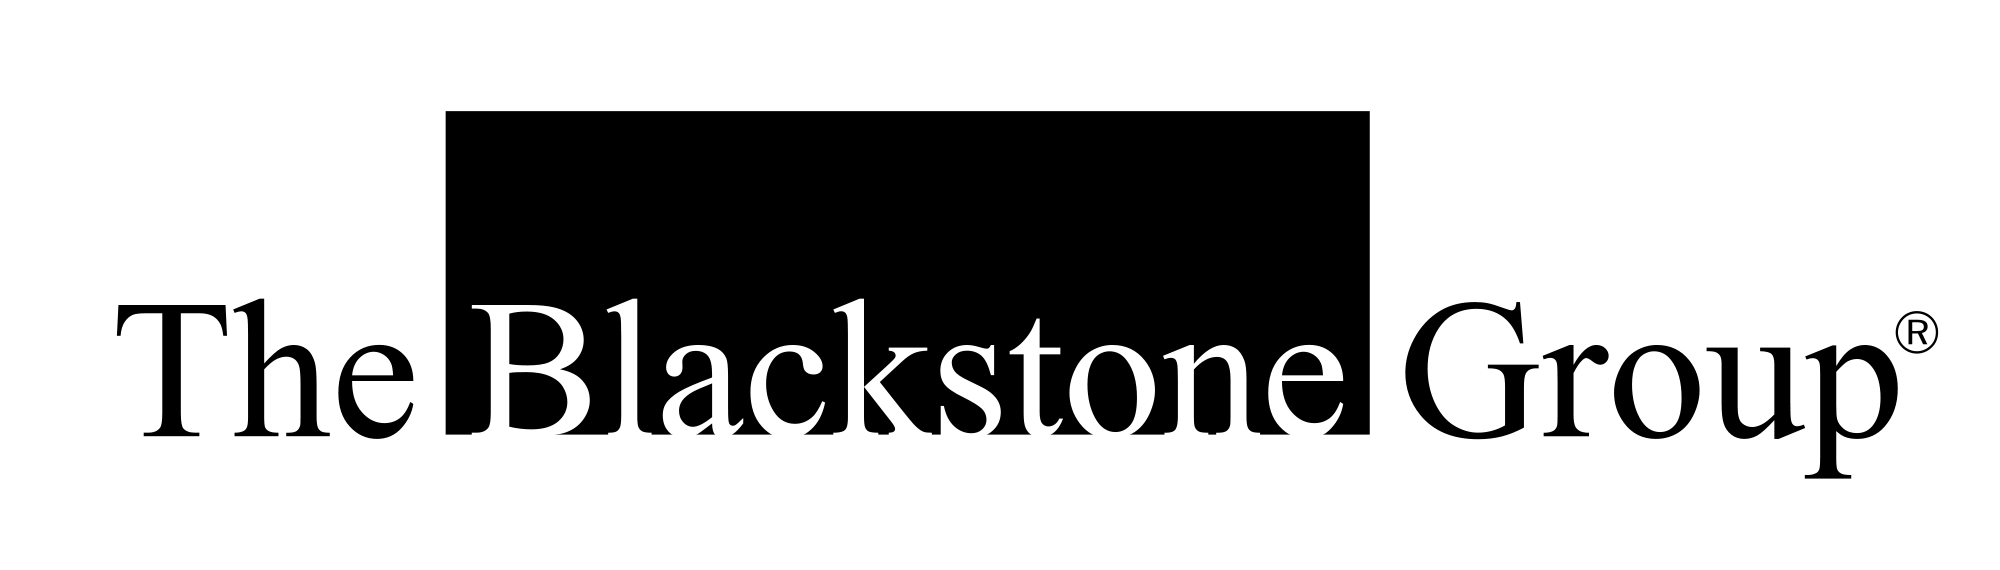 Blackstone Logo - File:The Blackstone Group Logo.svg - Wikimedia Commons